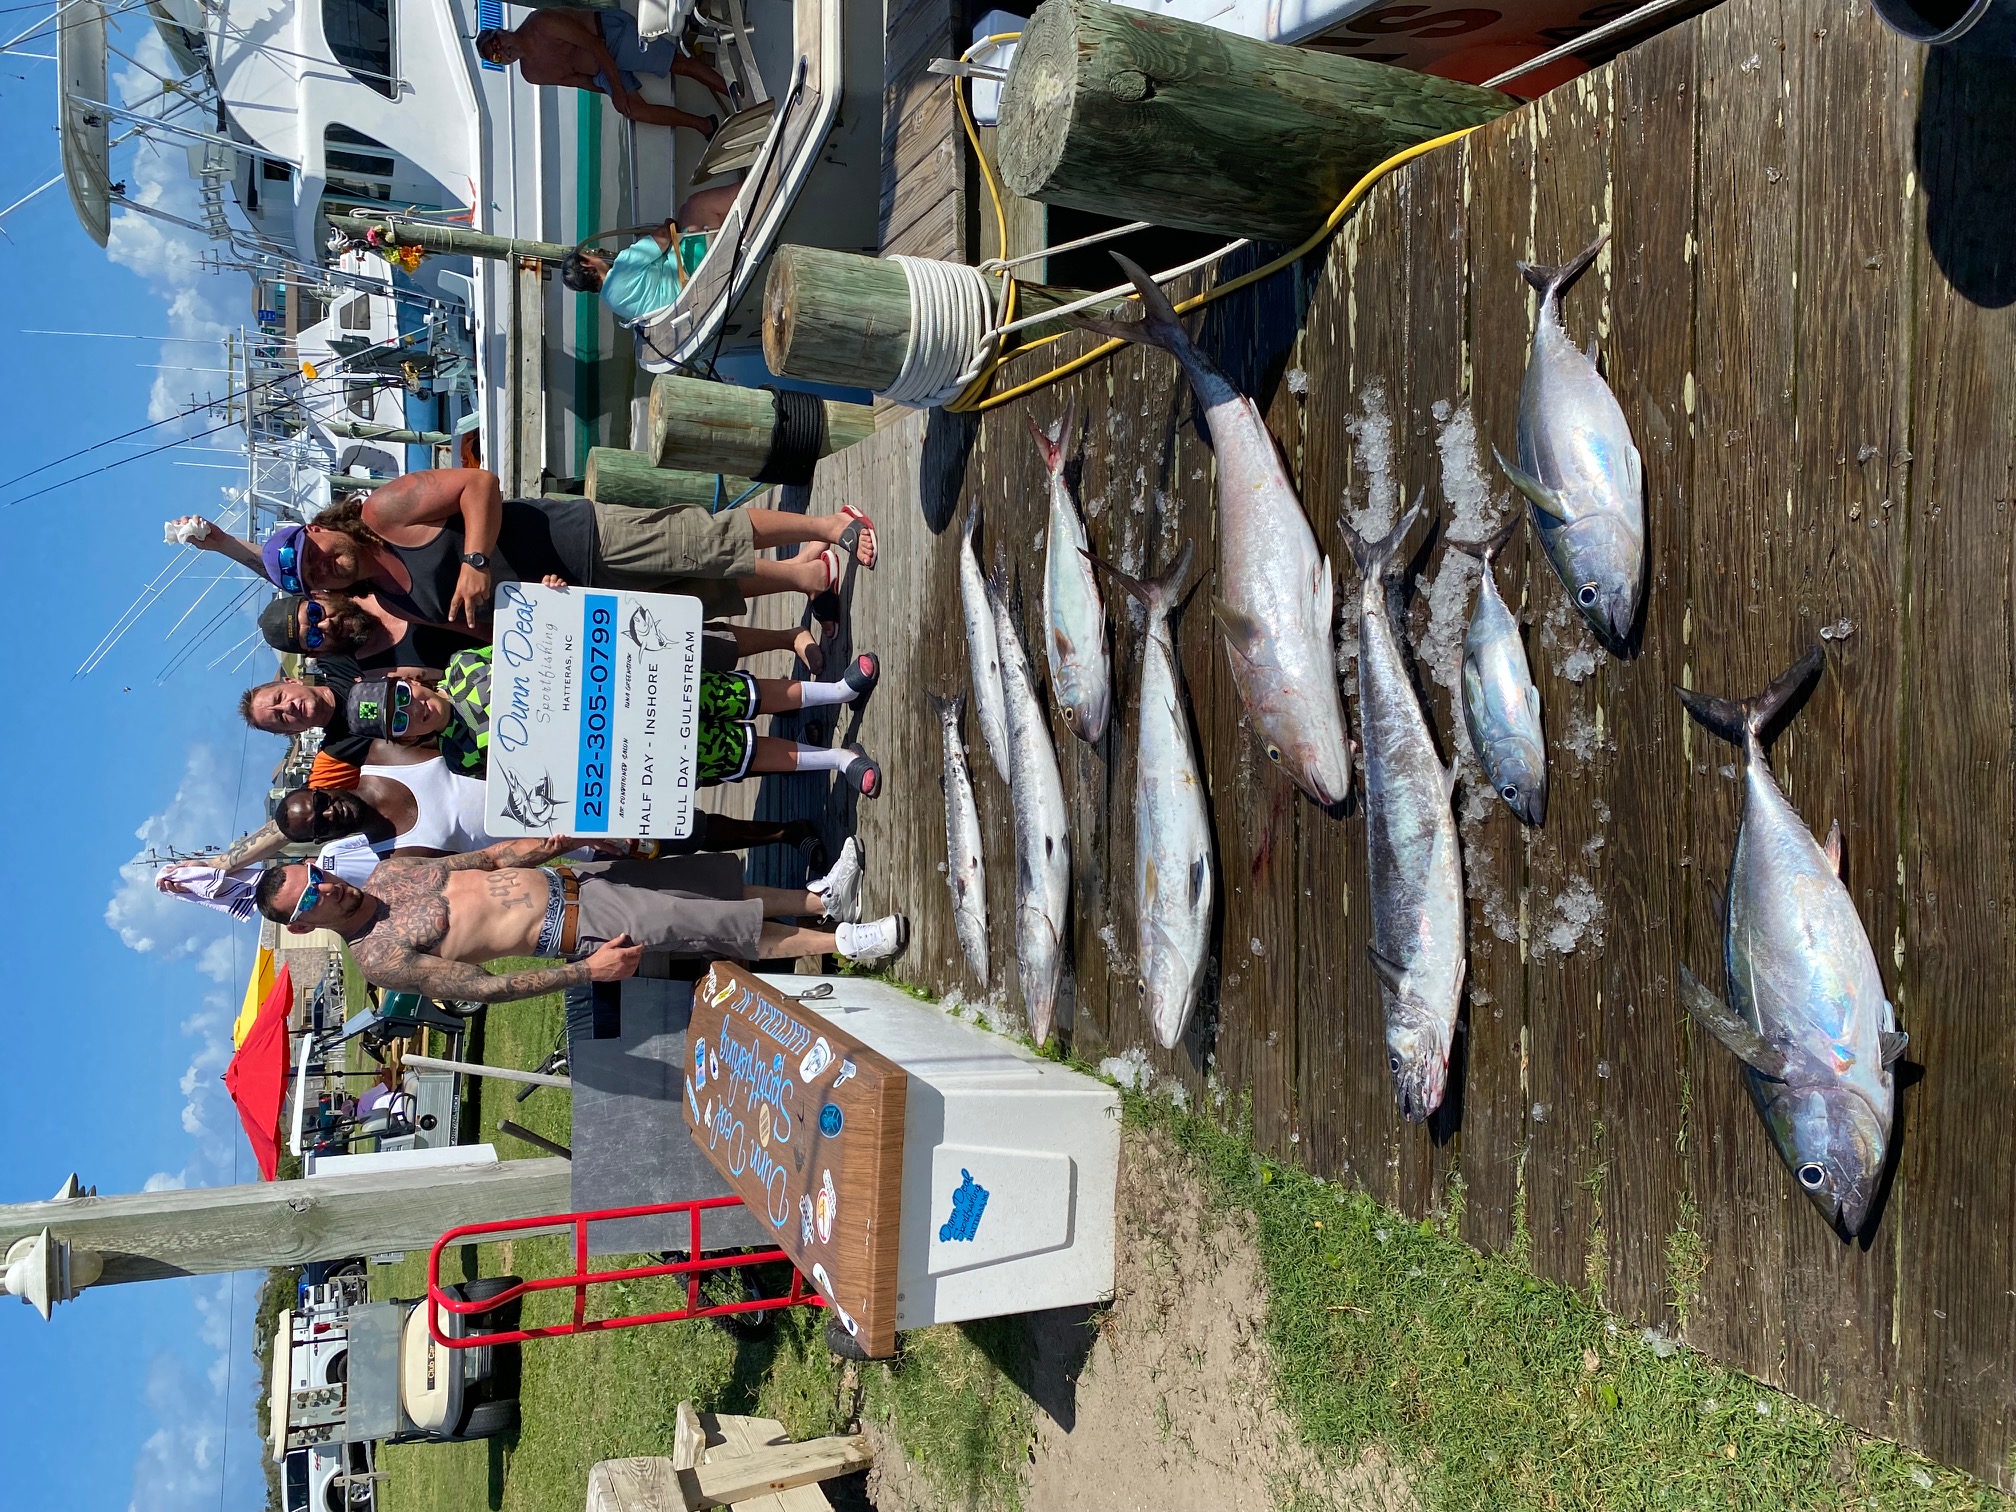 Dunn Deal Offshore Sportfishing Charters Hatteras, NC Teach's Lair Marina